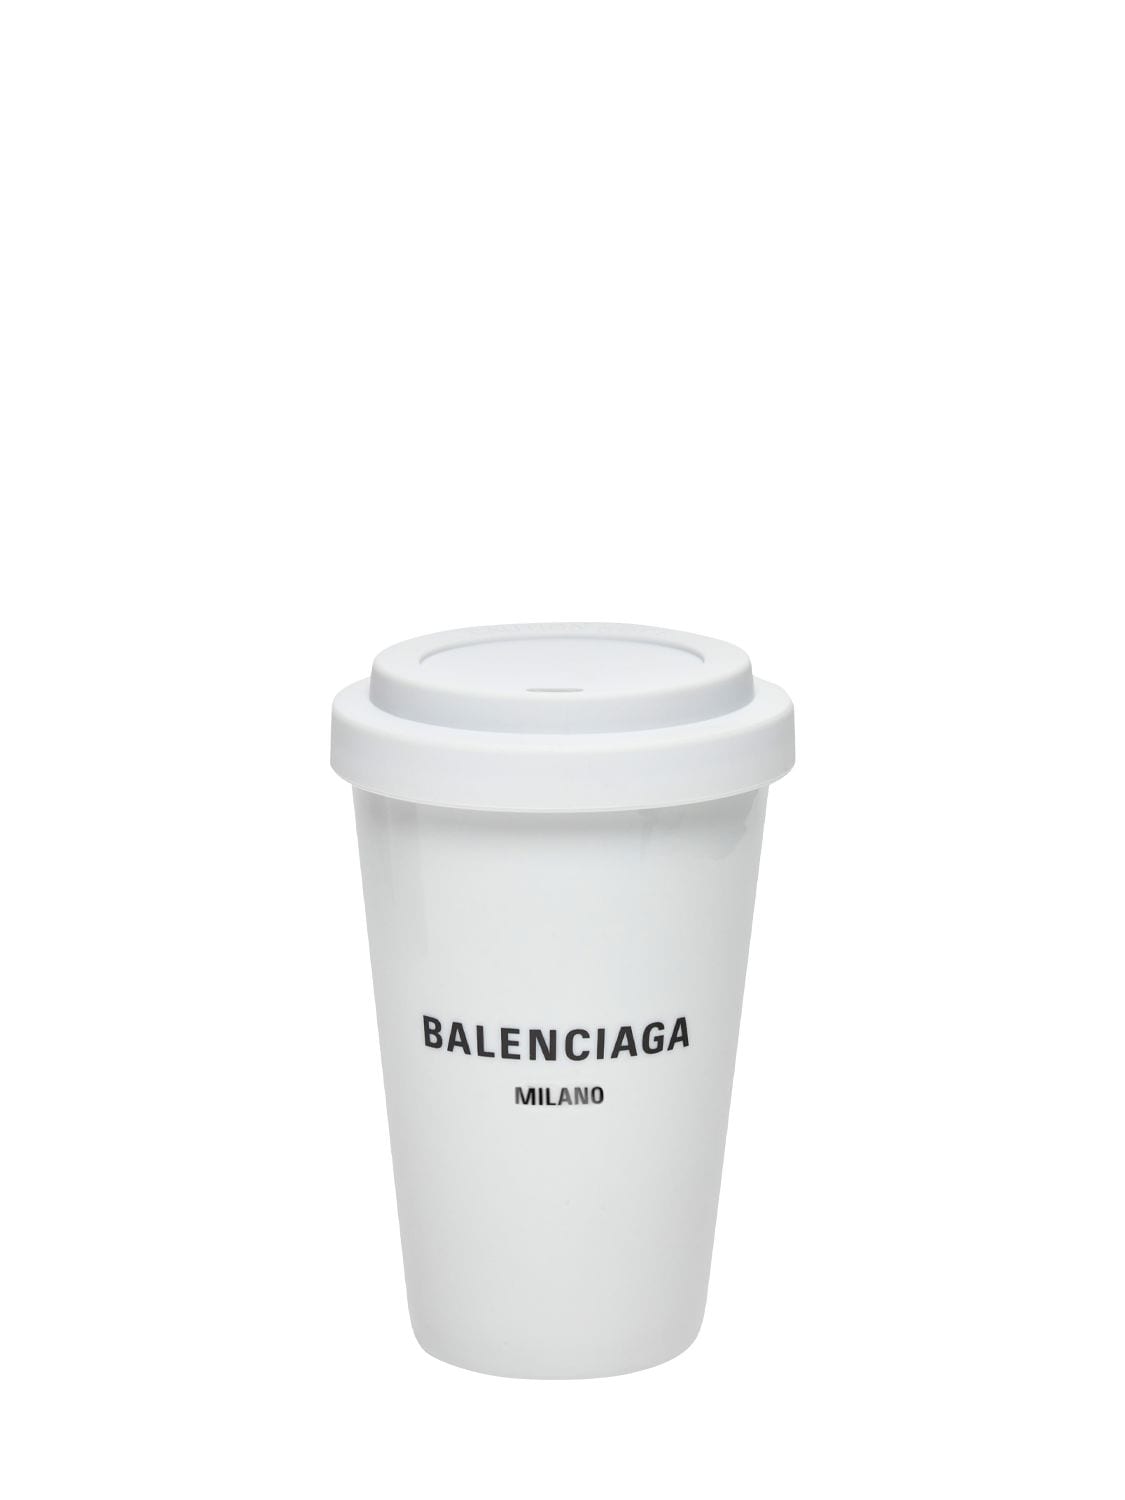 Balenciaga Milan陶瓷咖啡杯 In White